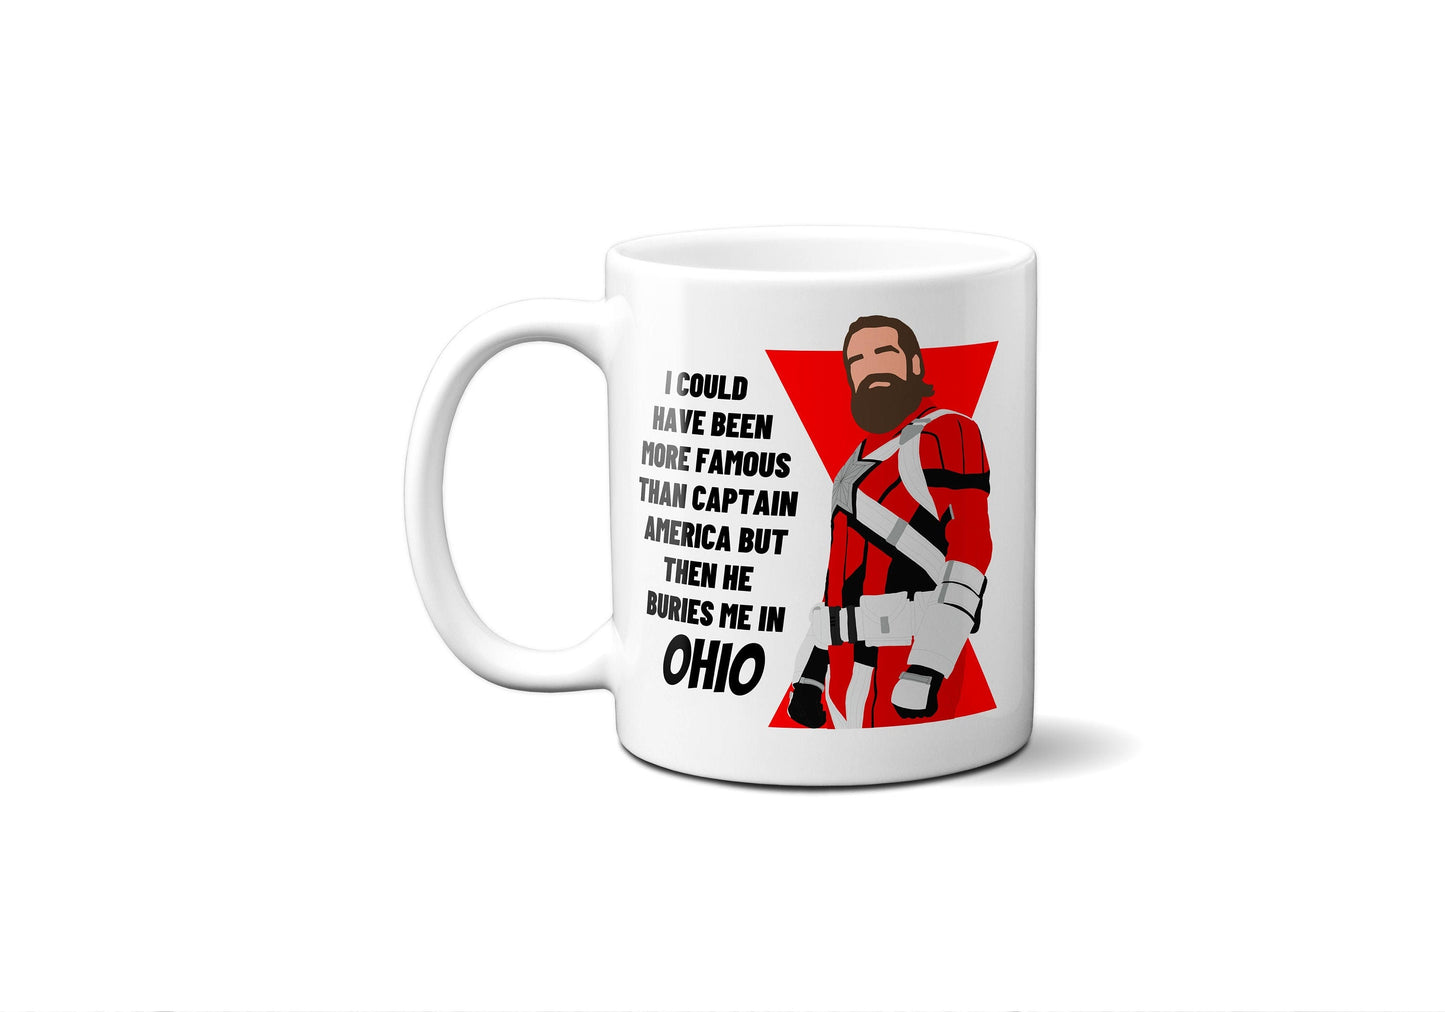 He buries me in Ohio | Red Guardian Mug | Marvel Black Widow Mug